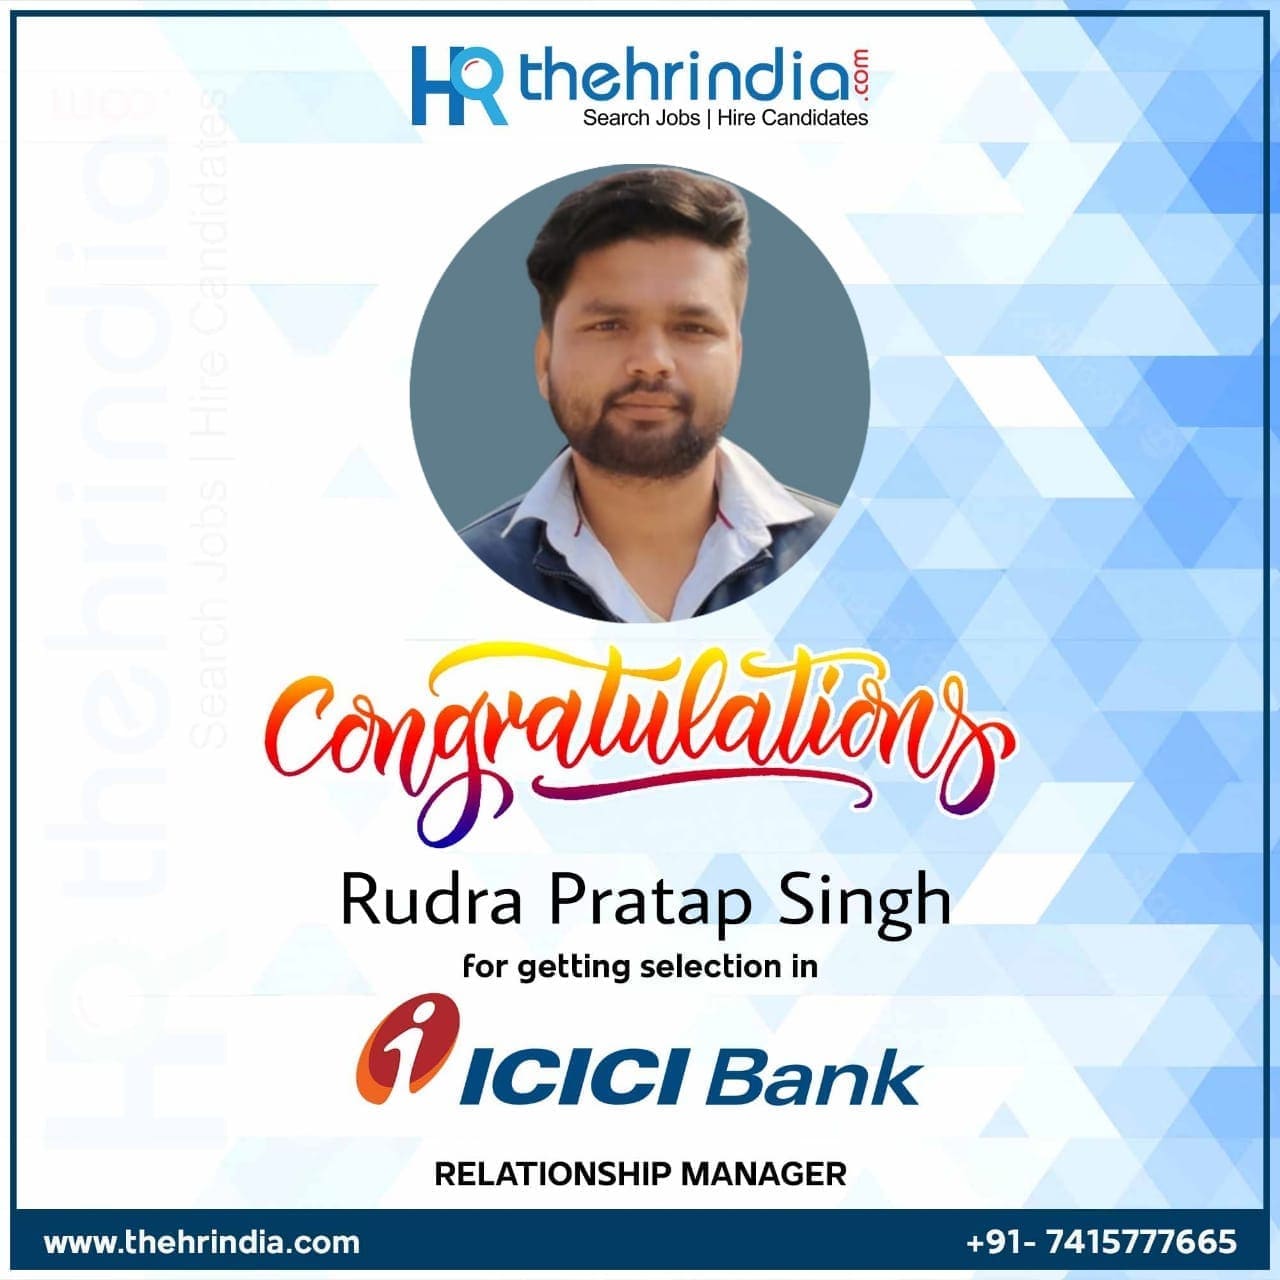 Rudra Pratap Singh | The HR India